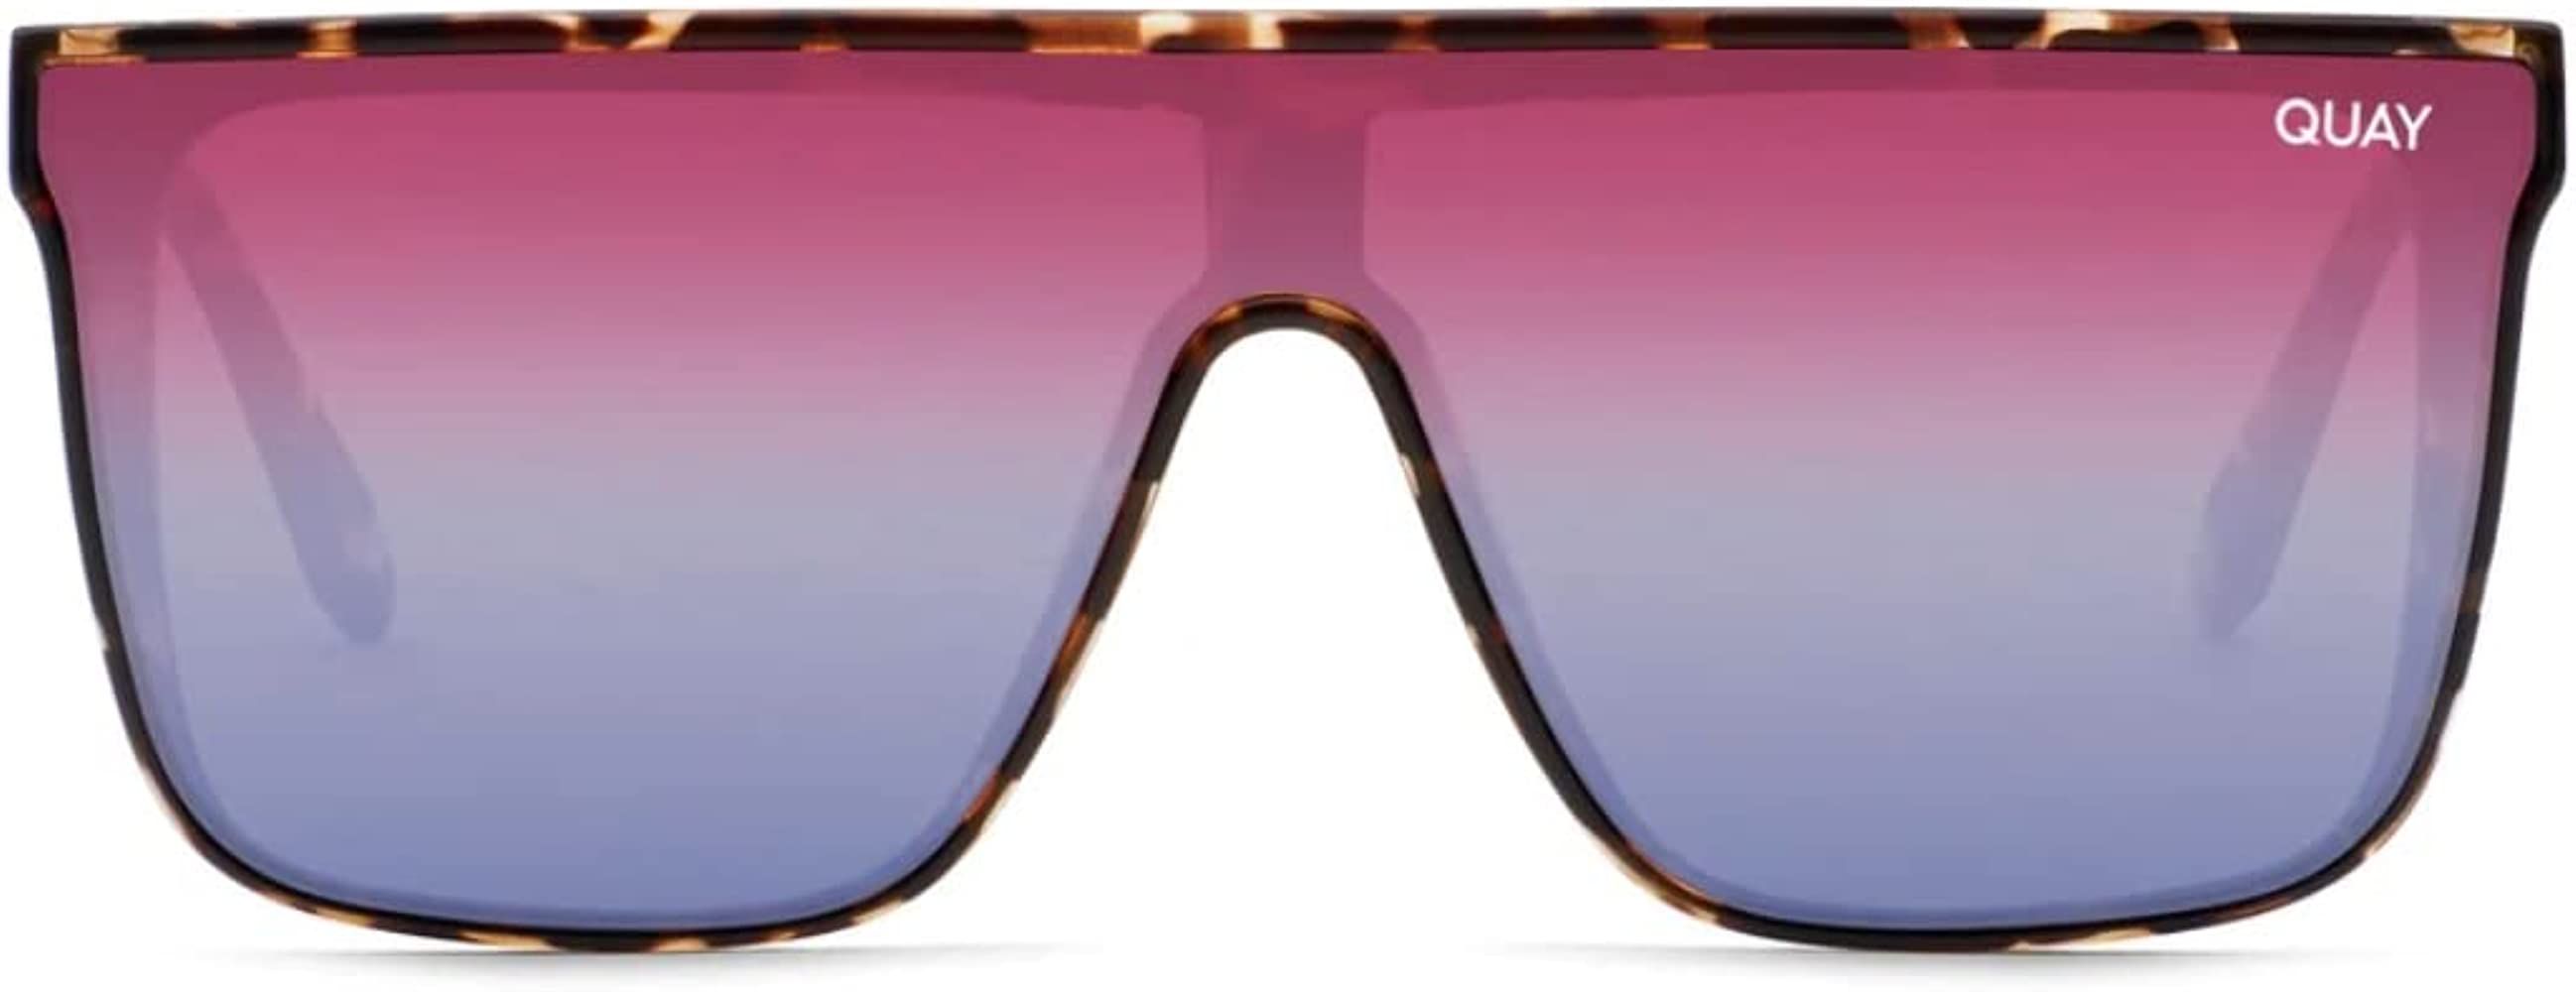 Quay sunglasses  | Amazon (US)